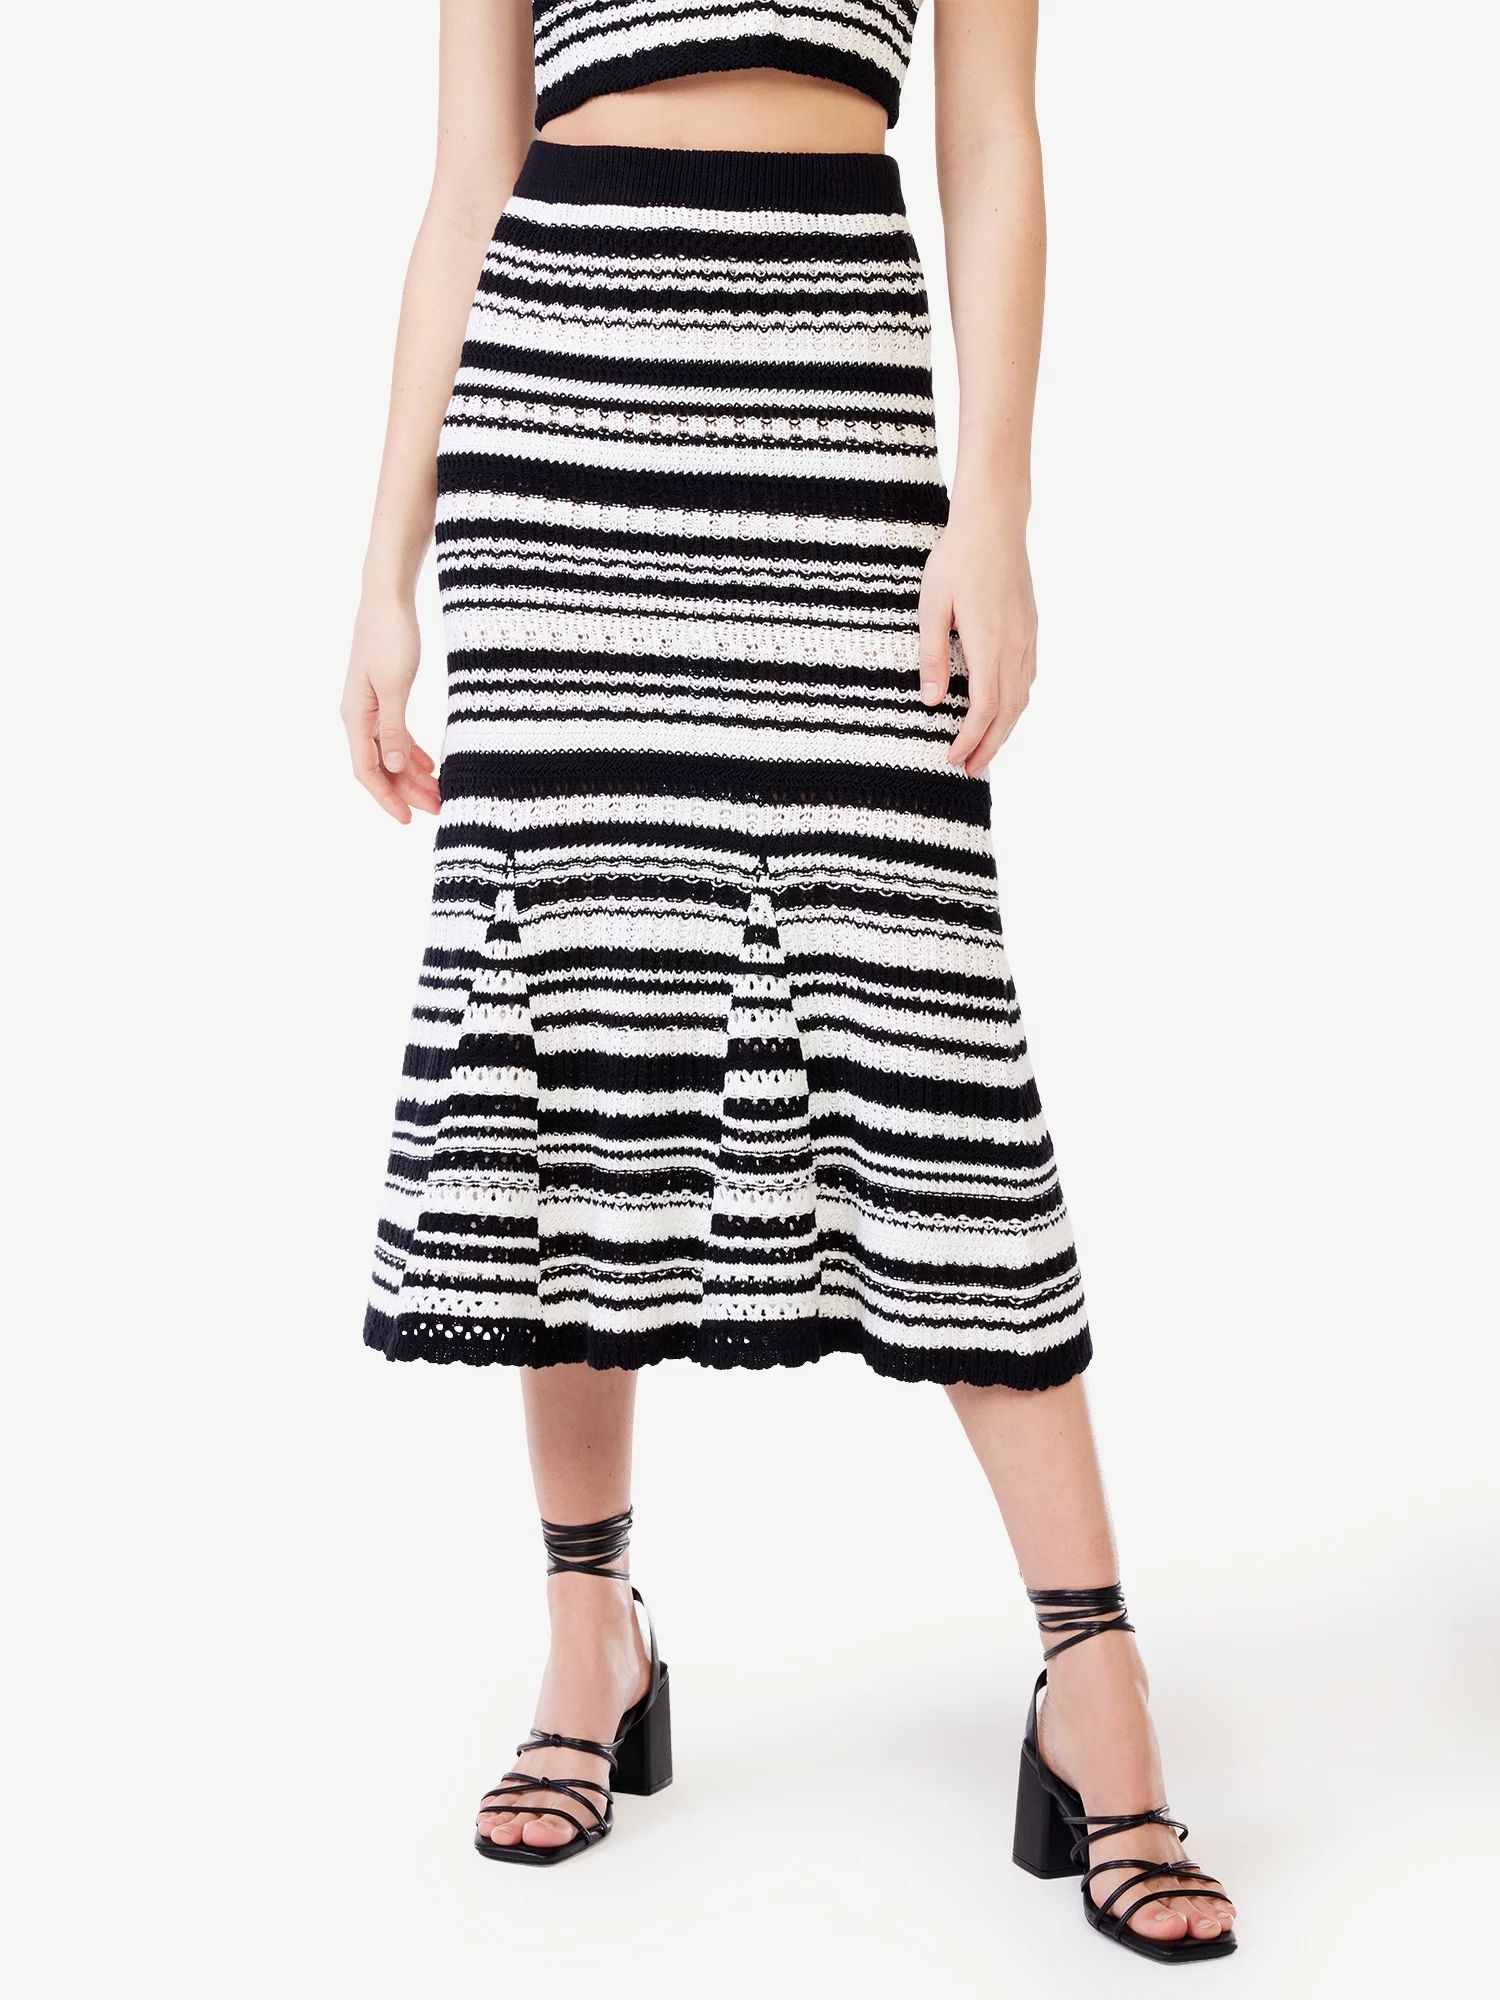 Scoop Women’s Loose Fit Striped Crochet Midi Skirt, Mid-Calf Length | Walmart (US)